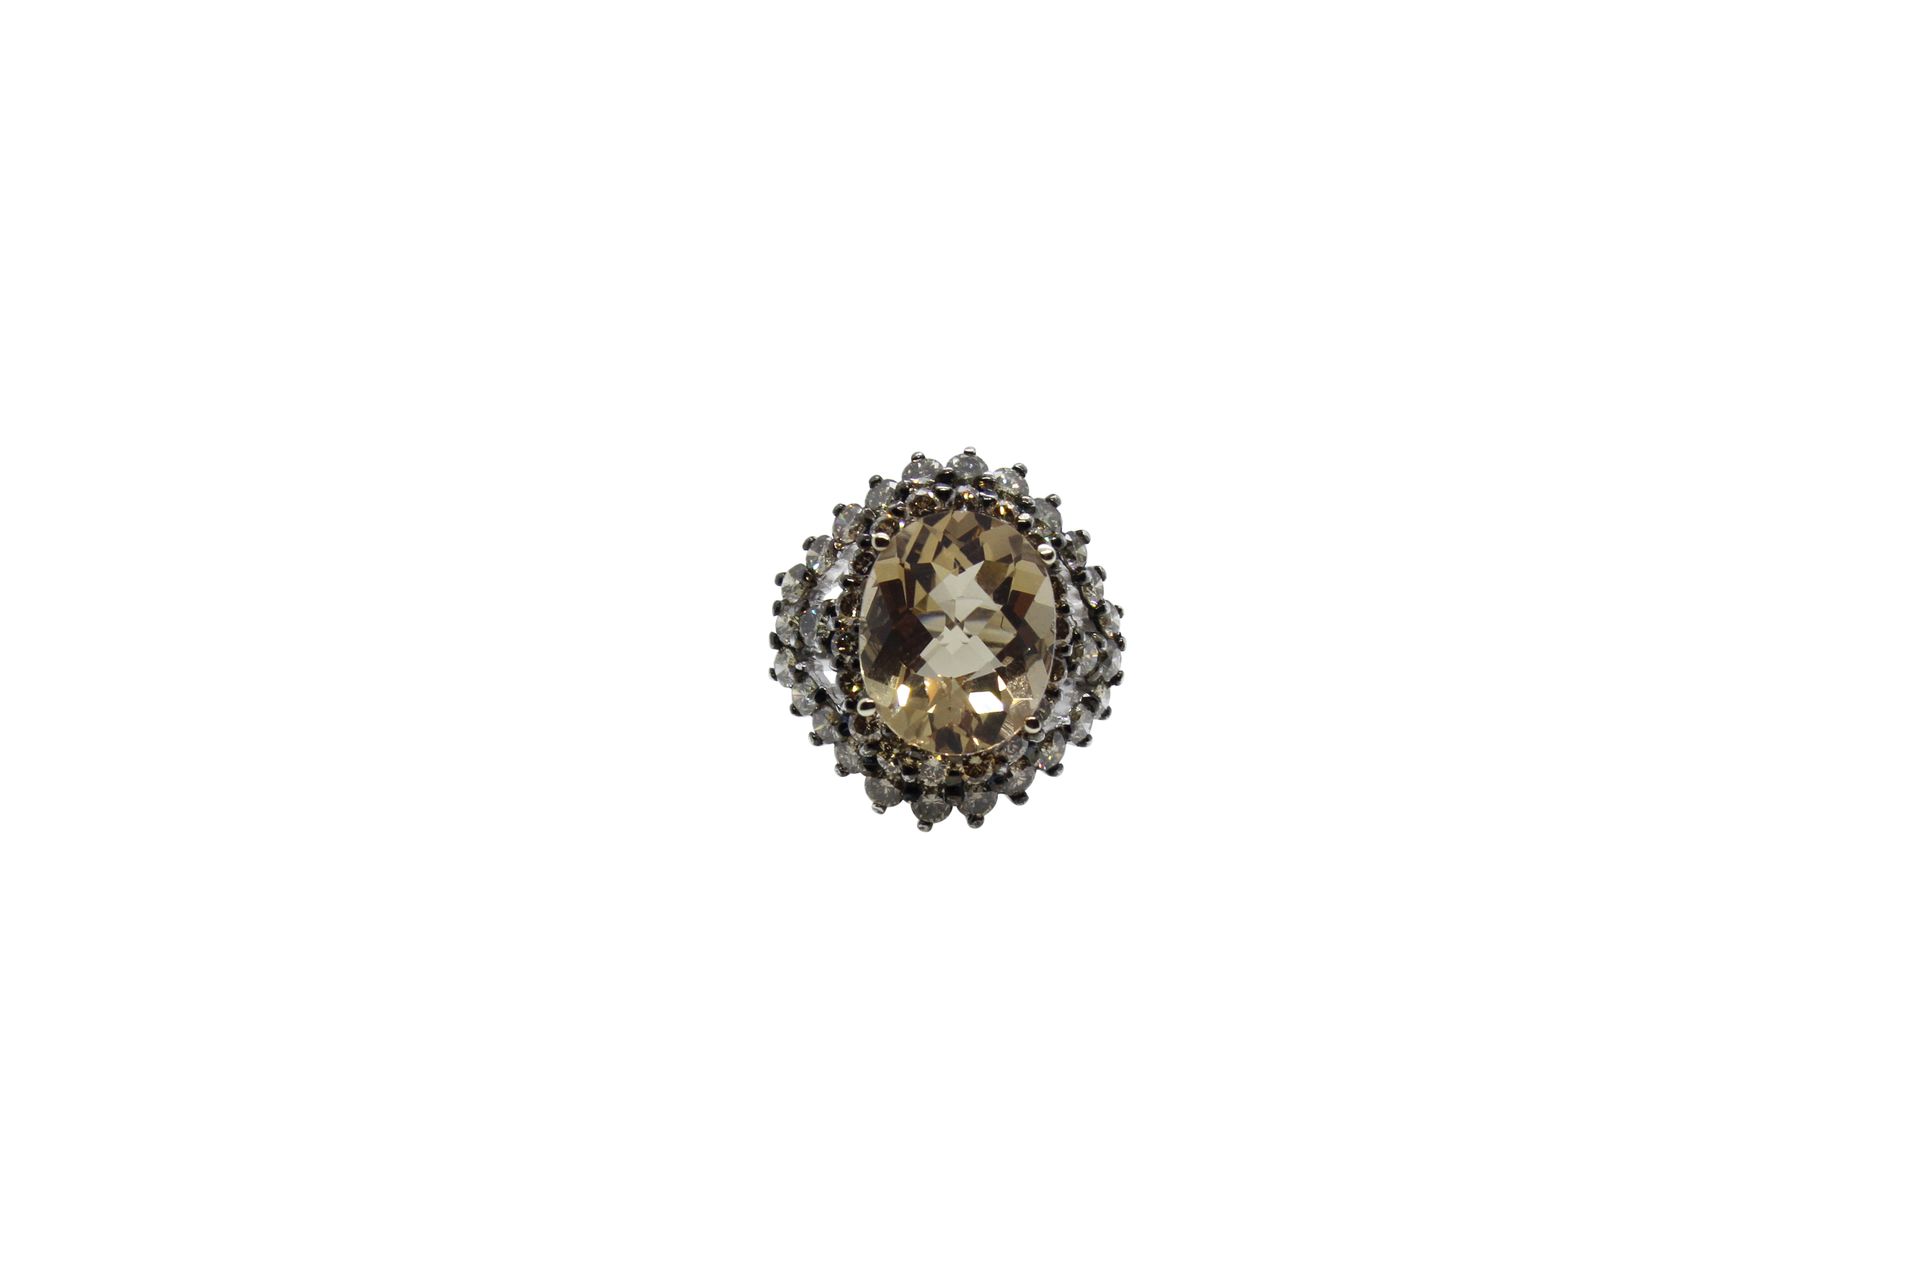 14k gold ring with approx. 2 ct diamonds and center topaz stone 
14 Karat Goldri&hellip;